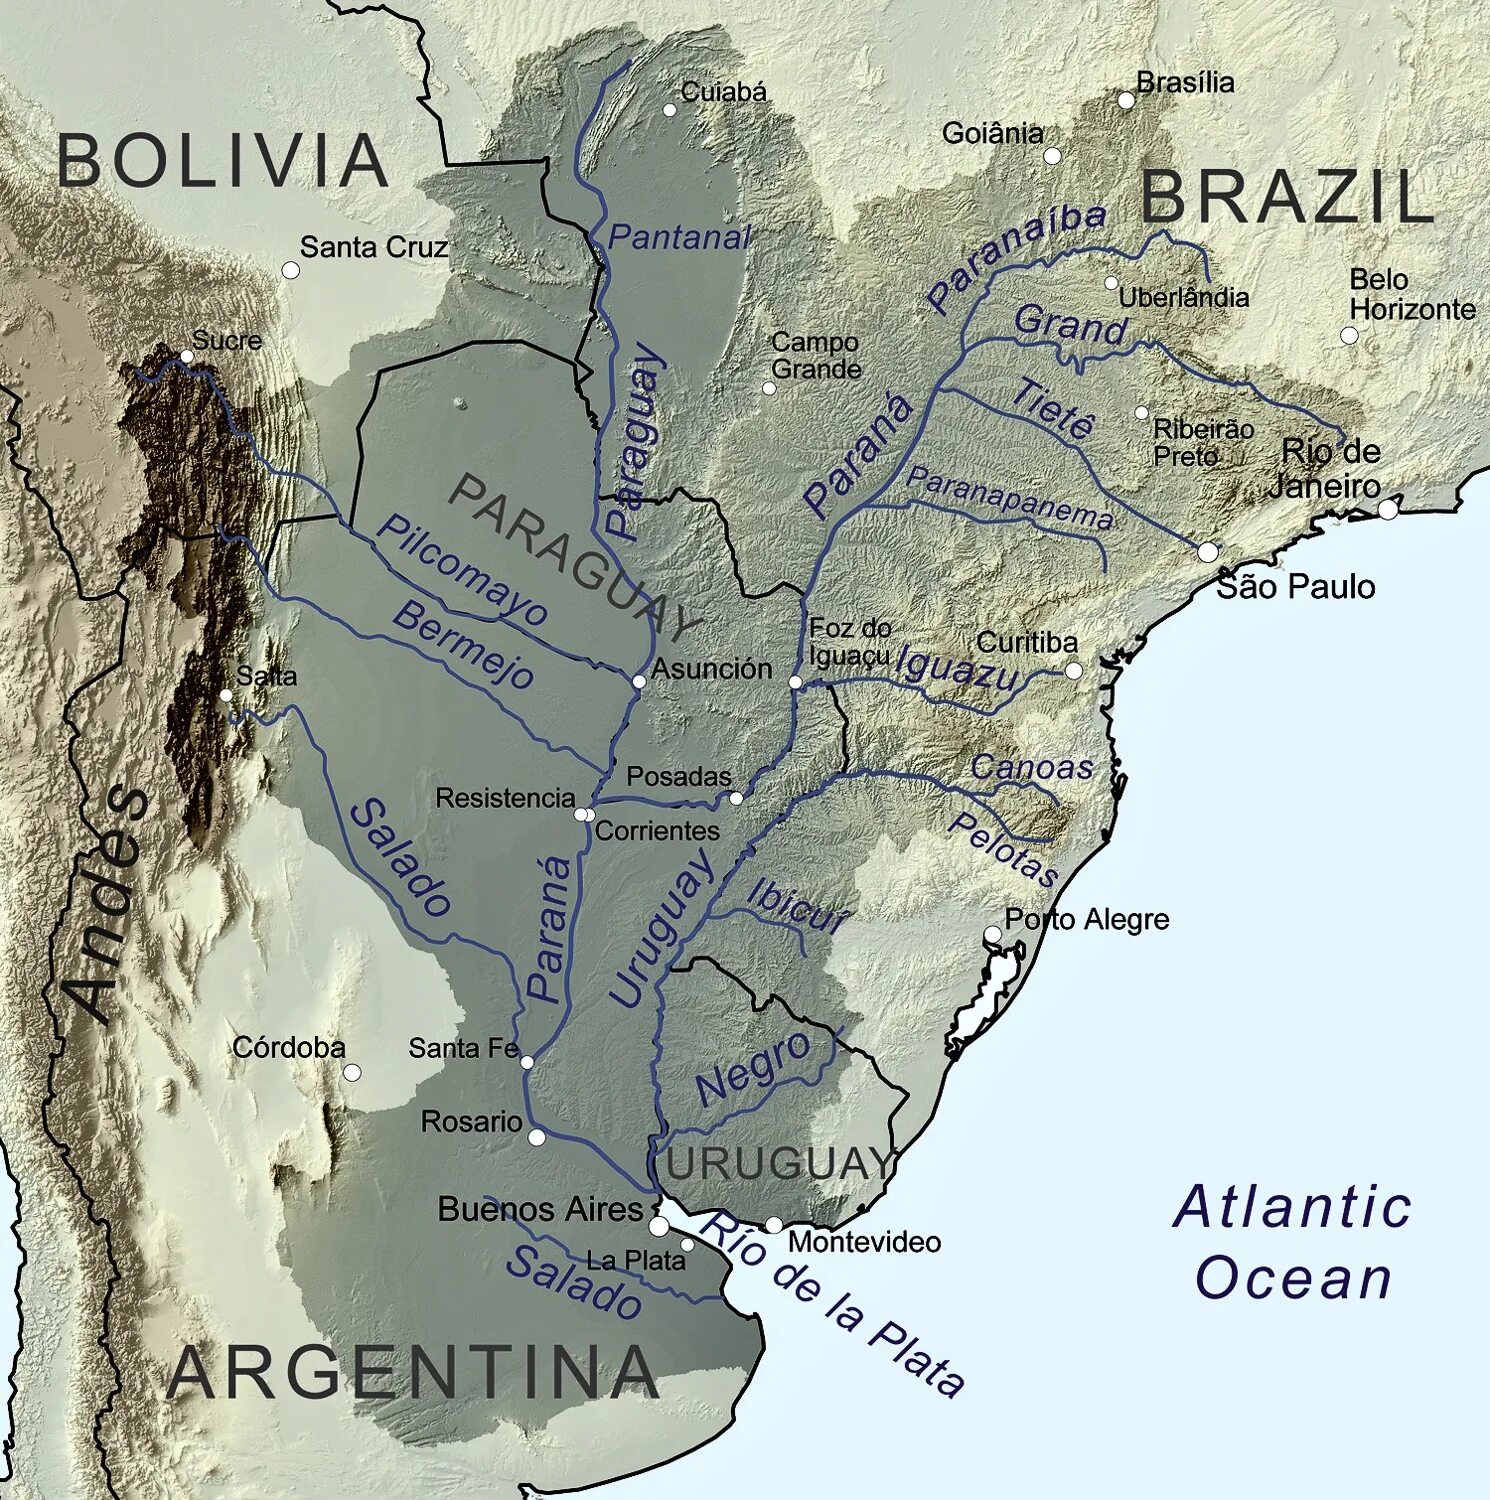 Анды какие реки берут начало. Бассейн реки Парана на карте. Бассейн реки Парана. Исток реки Парана в Южной Америке на карте. Река ла-плата на карте Южной Америки.